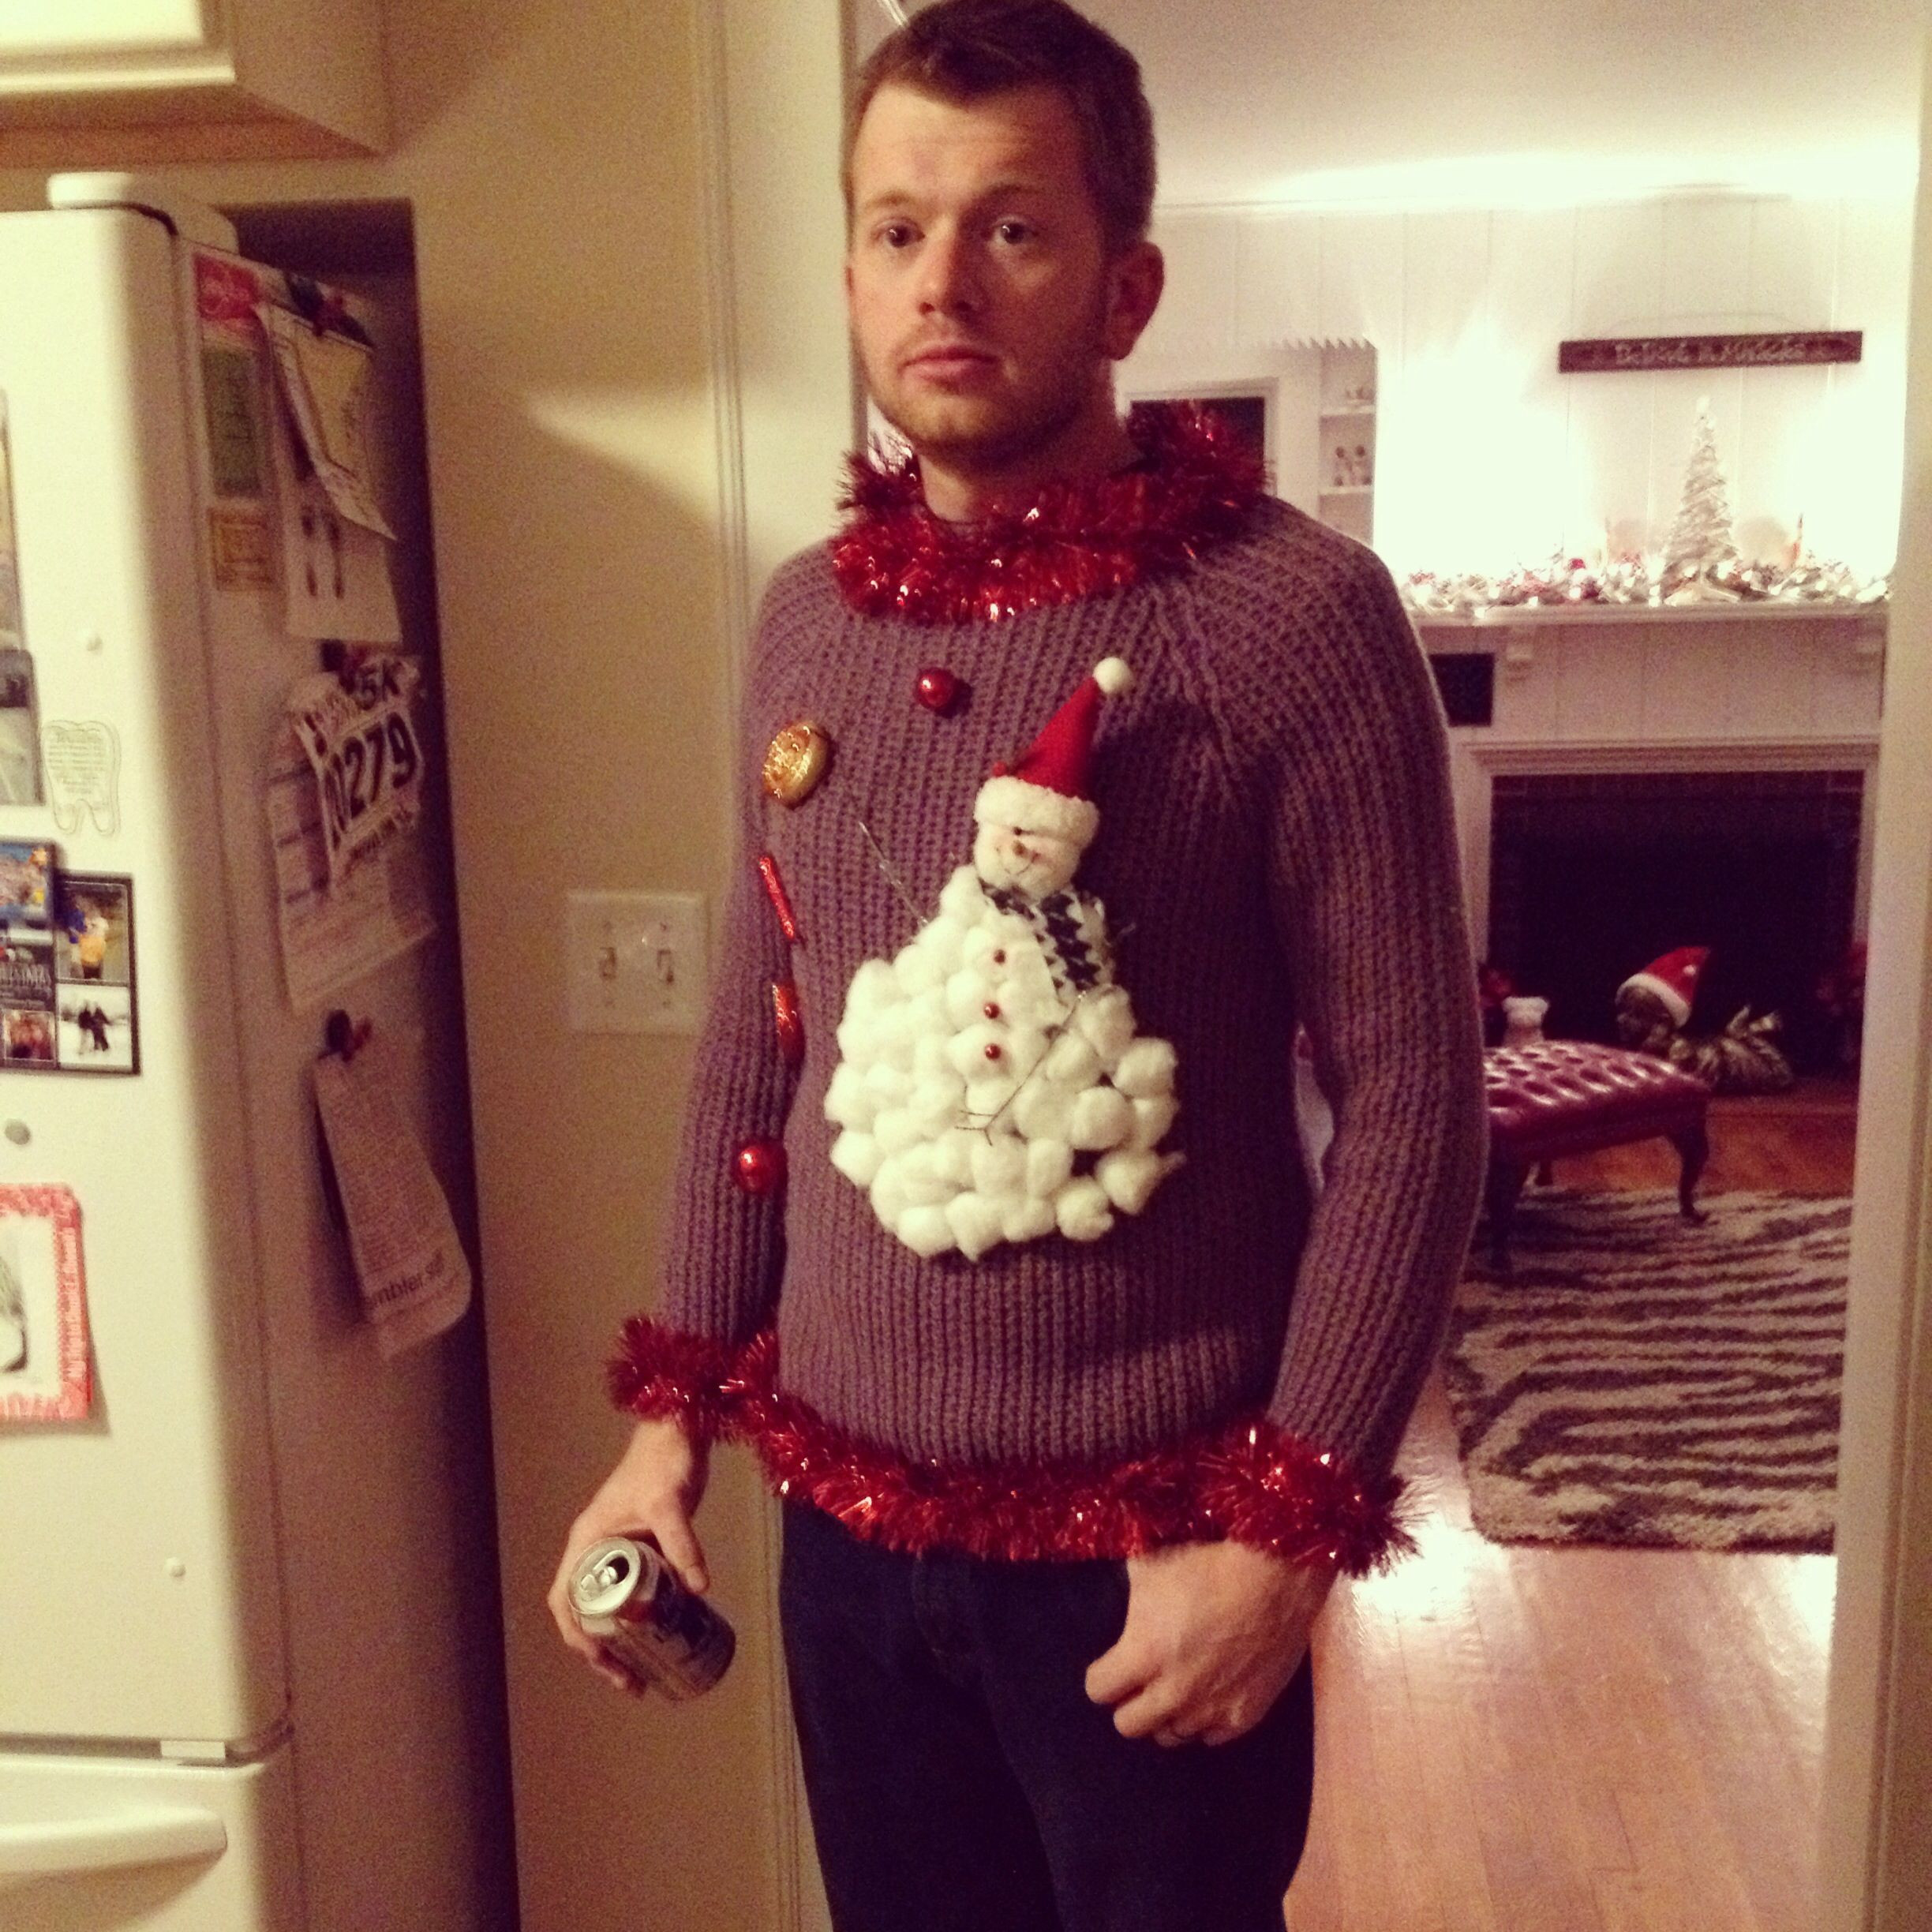 DIY Ugly Christmas Sweater Pinterest
 Best homemade ugly Christmas sweater DIY